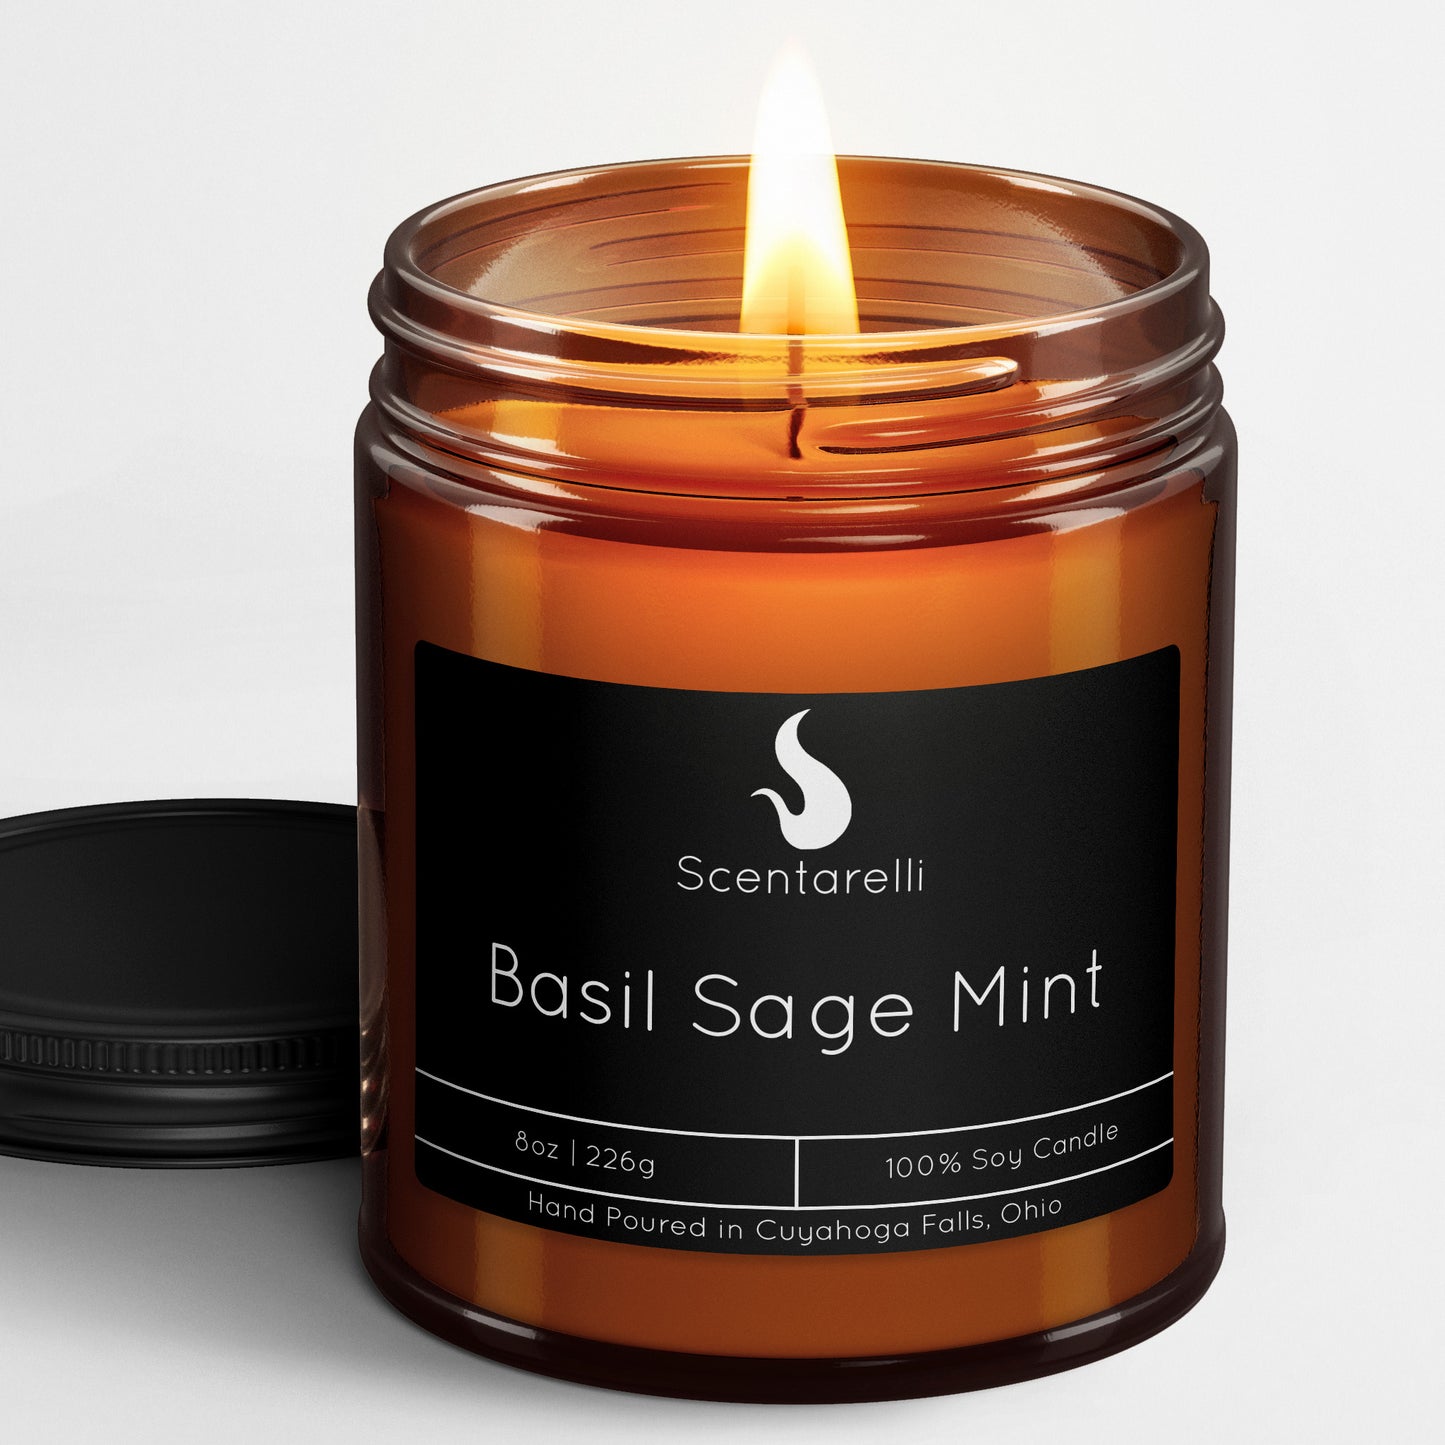 Basil Sage Mint Candle